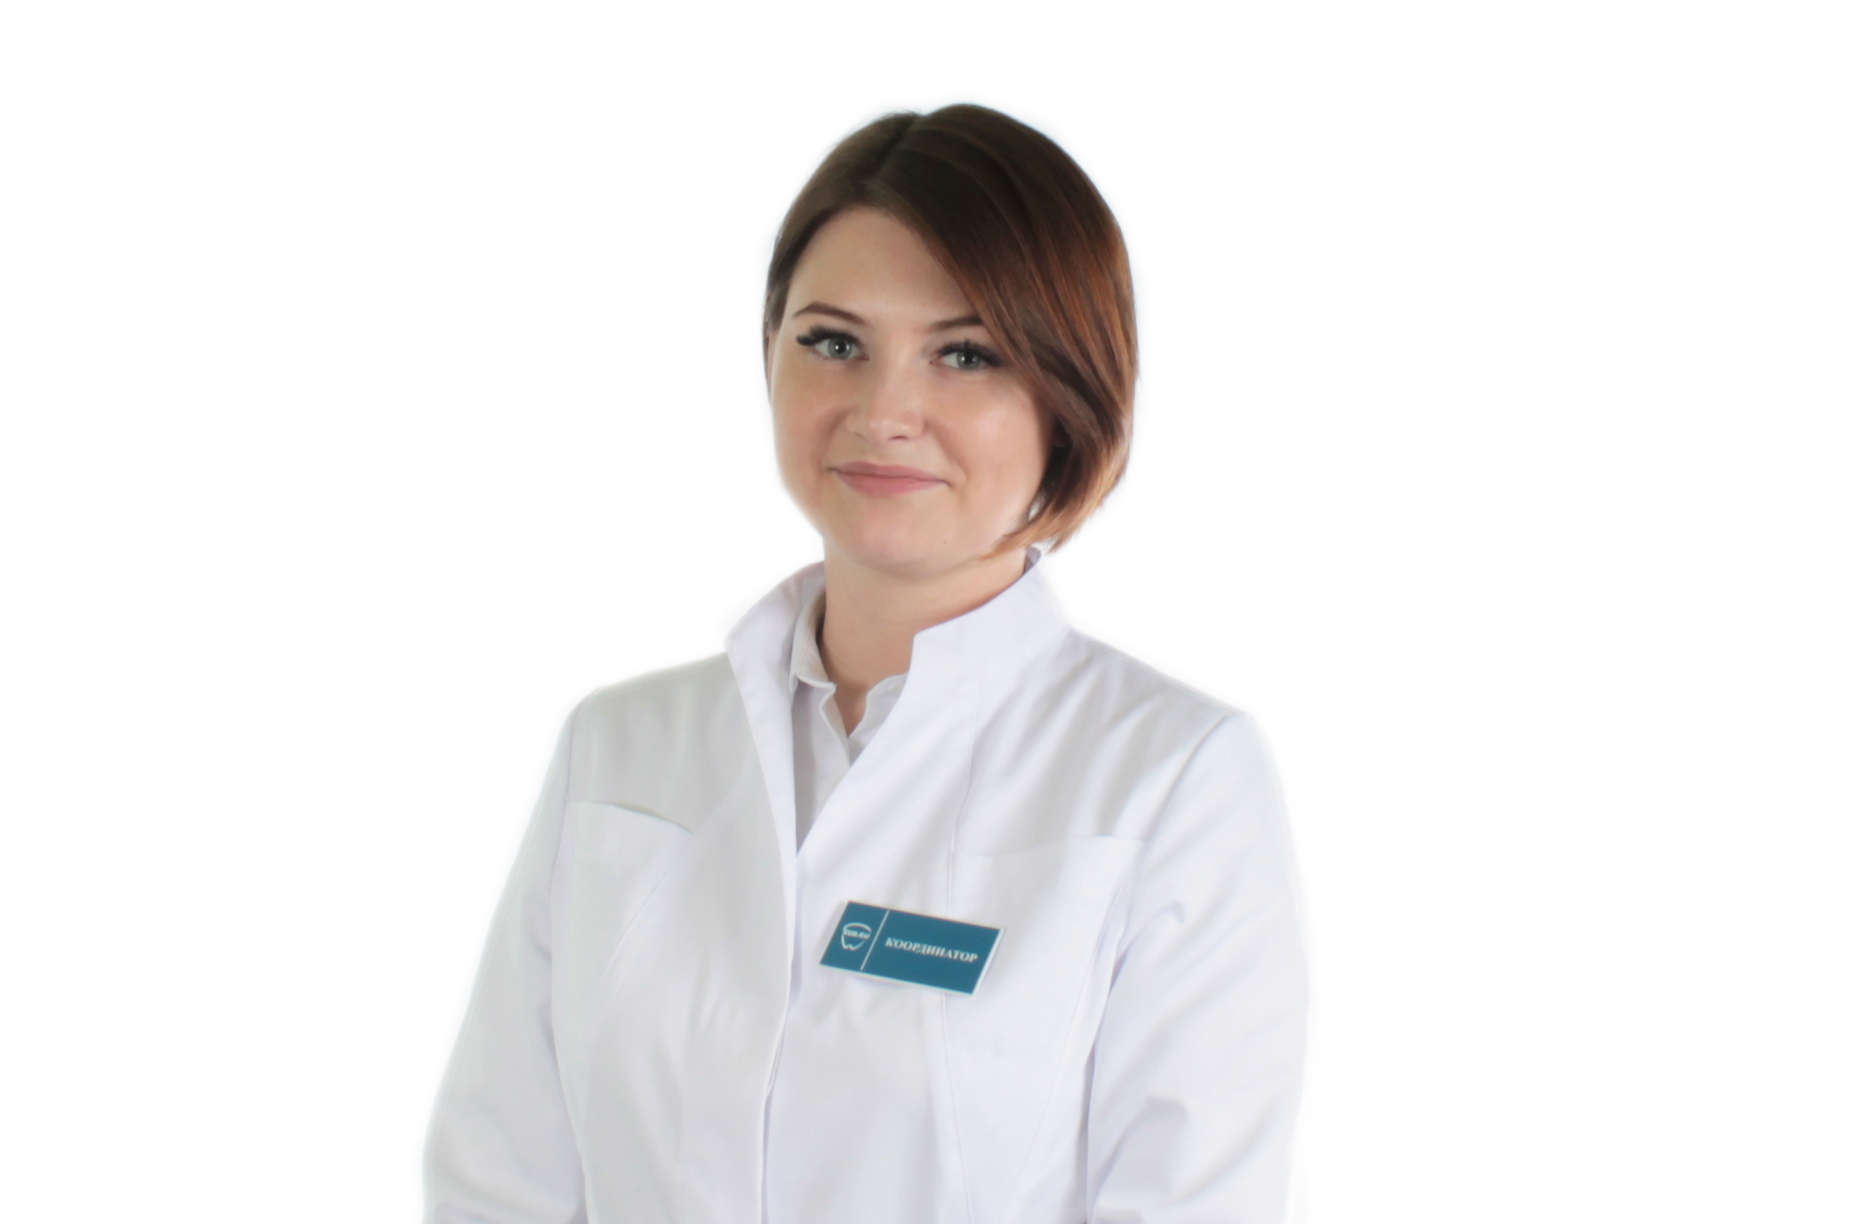  Координатор лечения Морозова Анастасия Витальевна